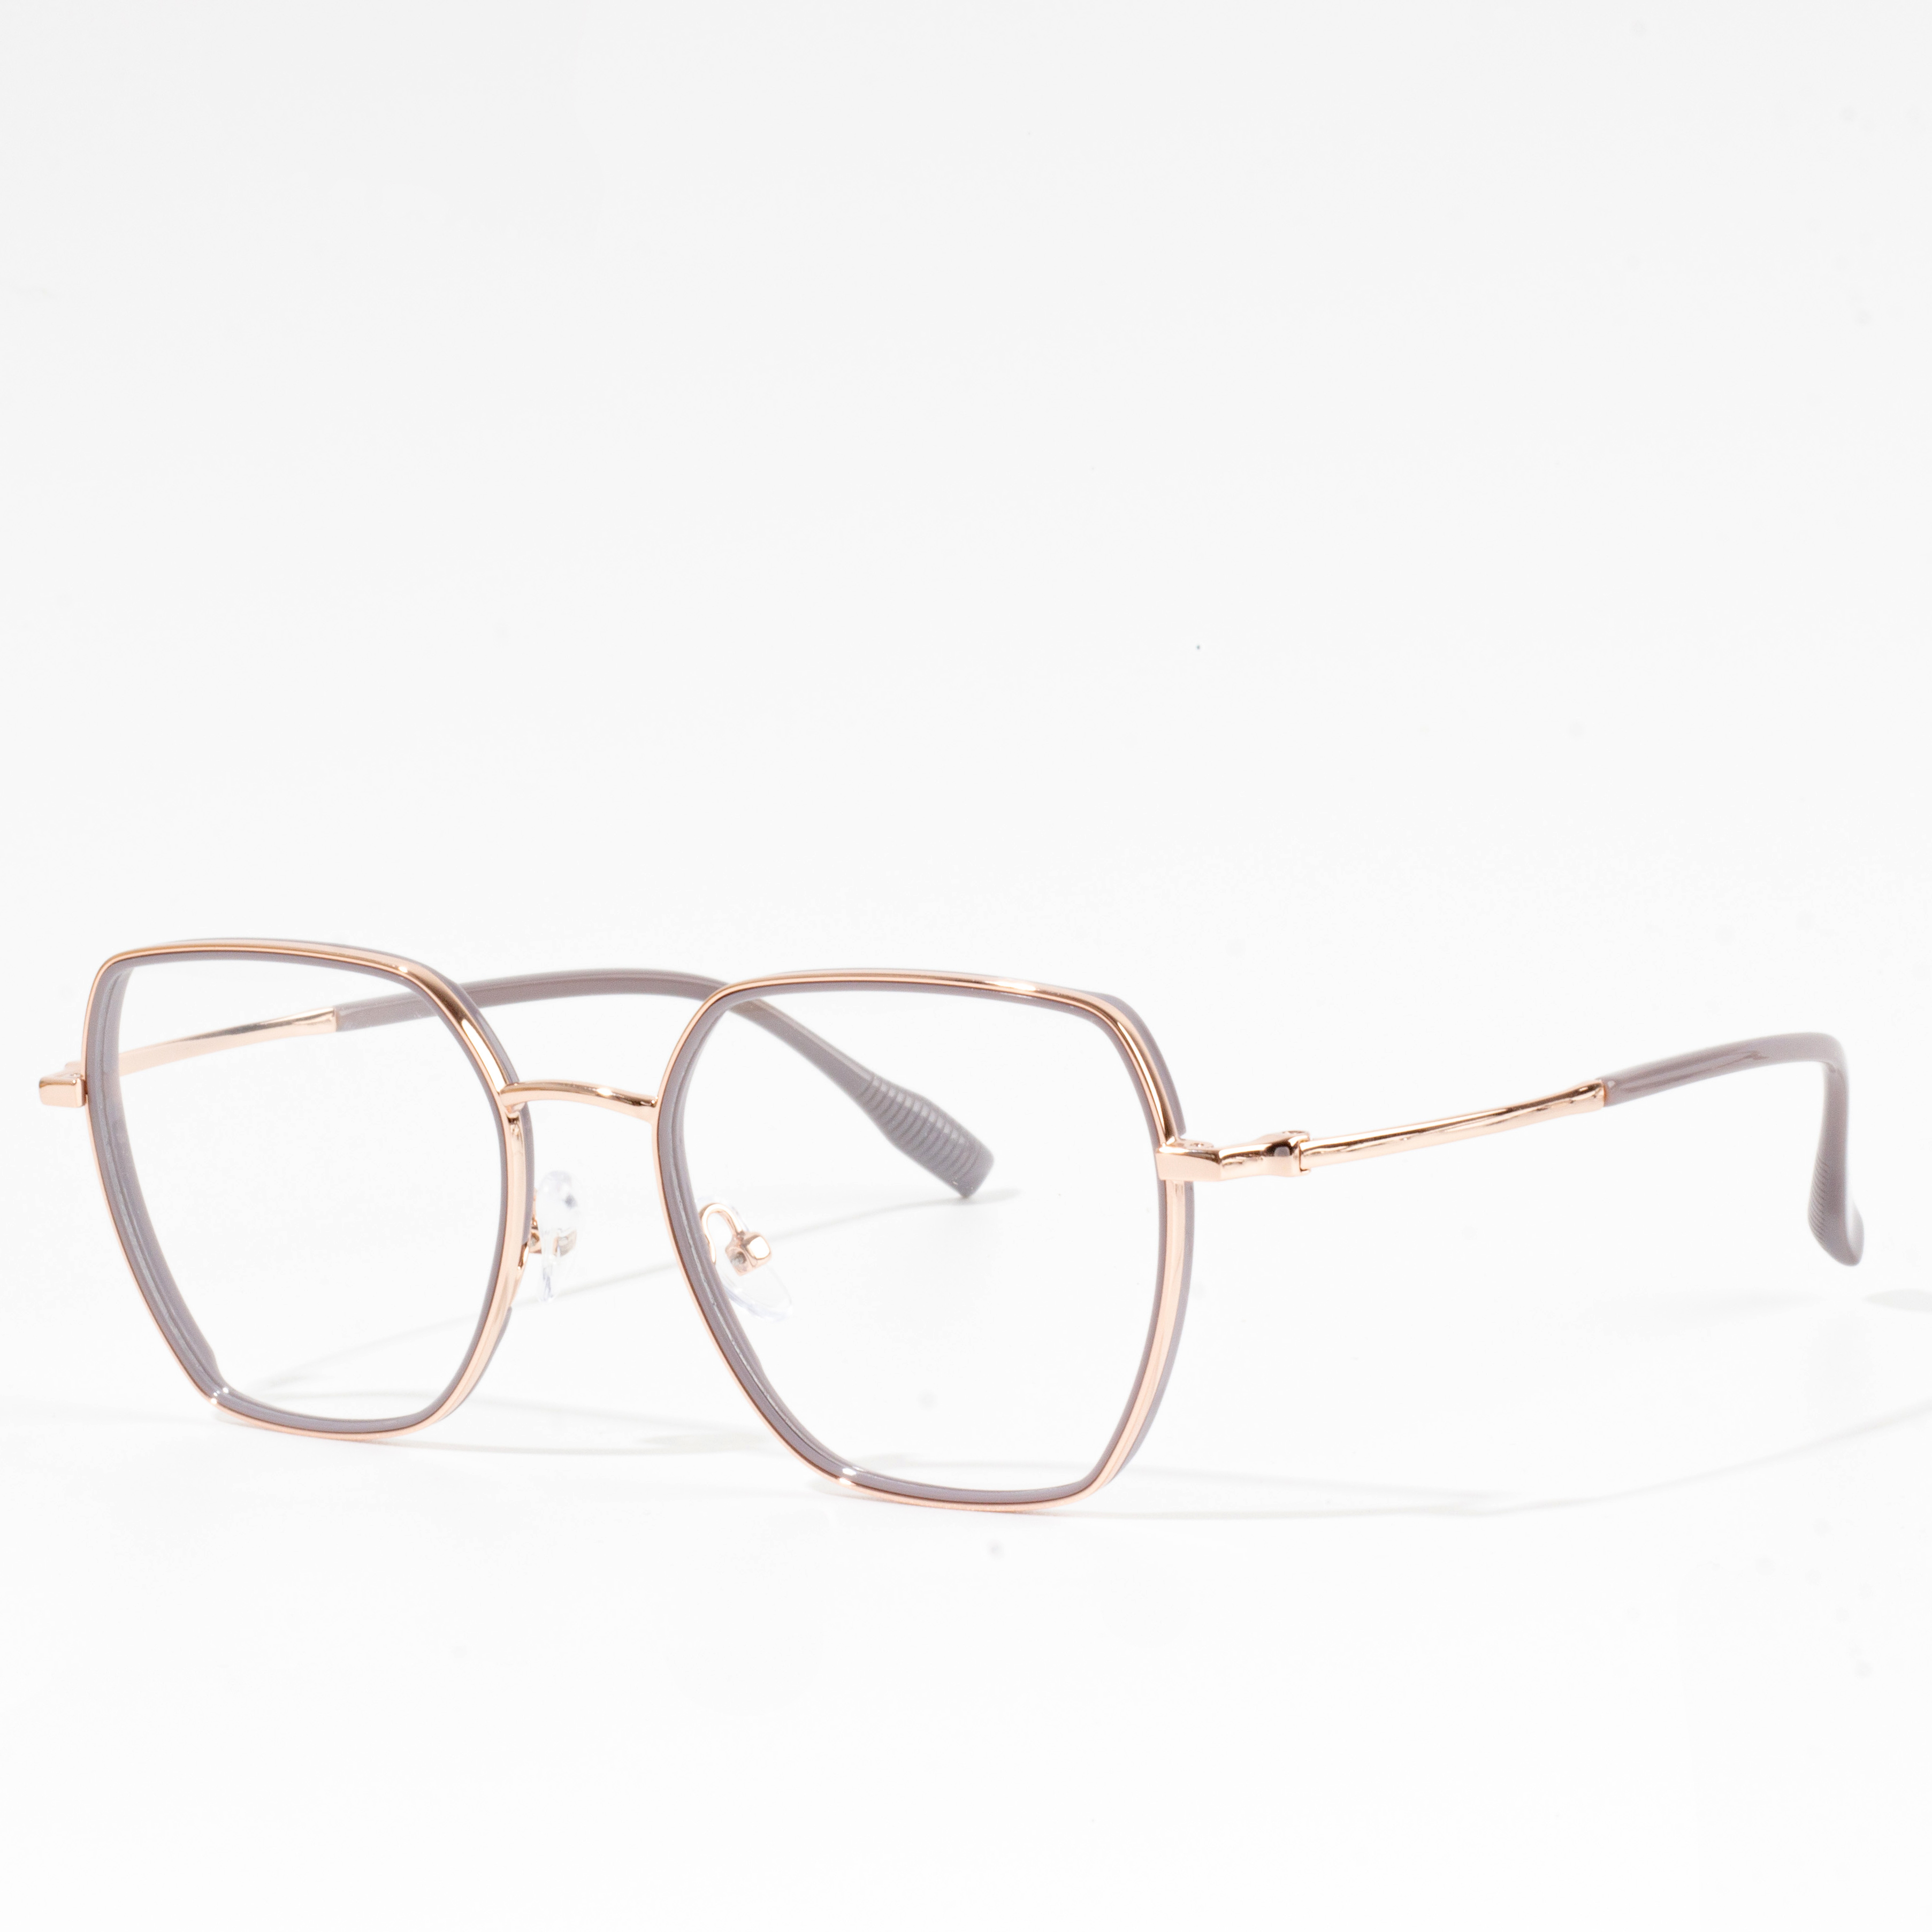 thin lightweight metal eyeglasses